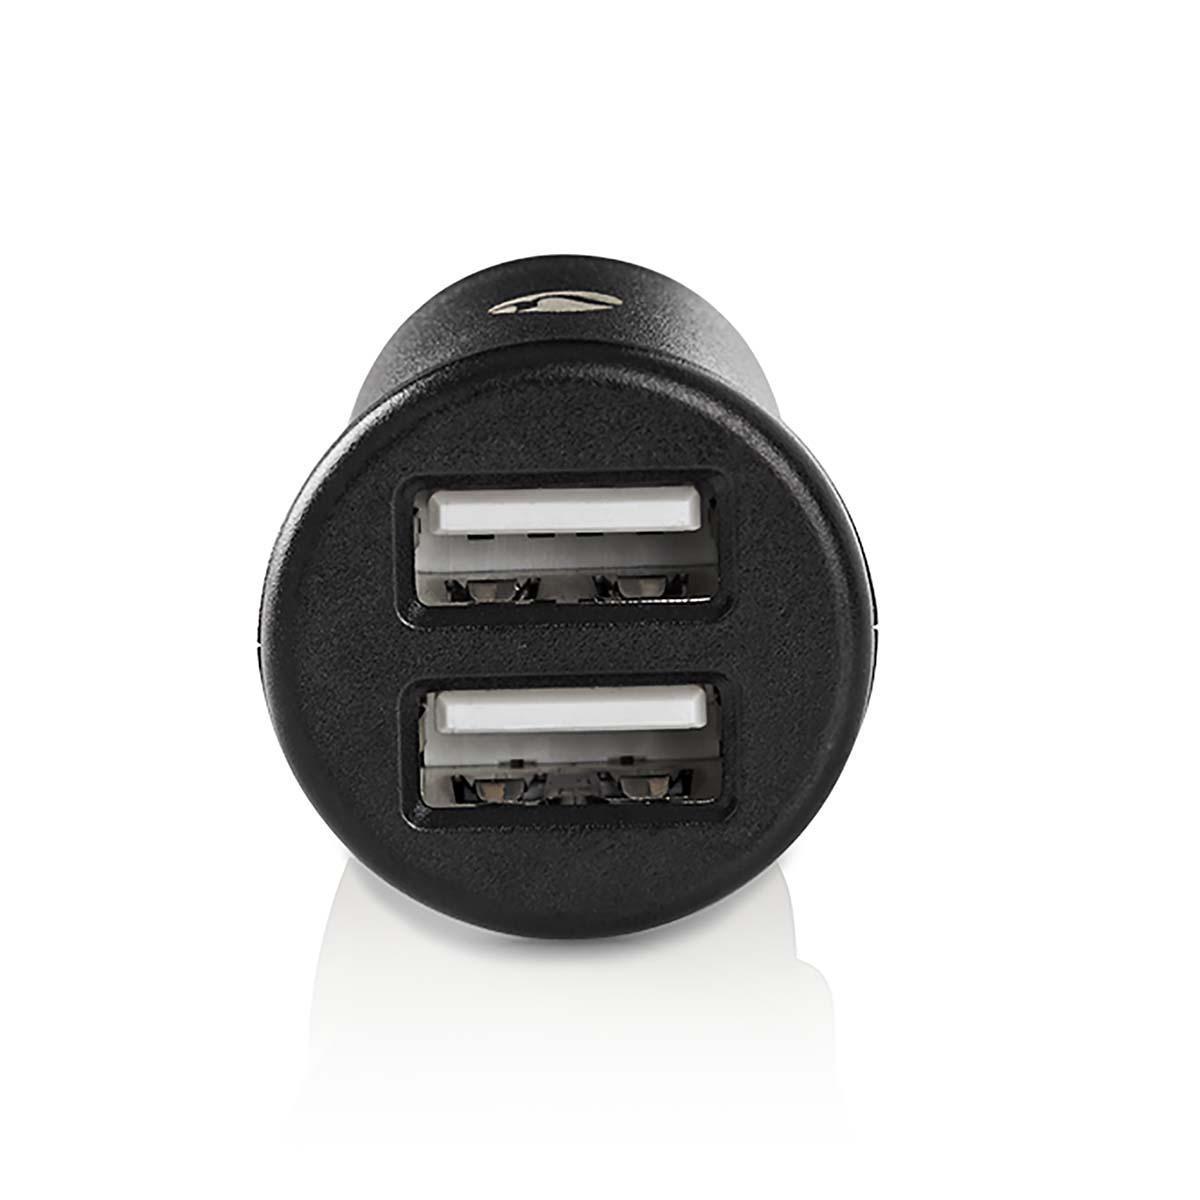 Helder op Van streek ontwikkeling USB autolader - Aansluiting 1: Sigarettenaansteker, Aansluiting 2: 2x USB A  female, Spanning: 12/24 Volt, Laadstroom 1x USB: 2400 mA, Laadstroom 2x USB:  2400 mA.